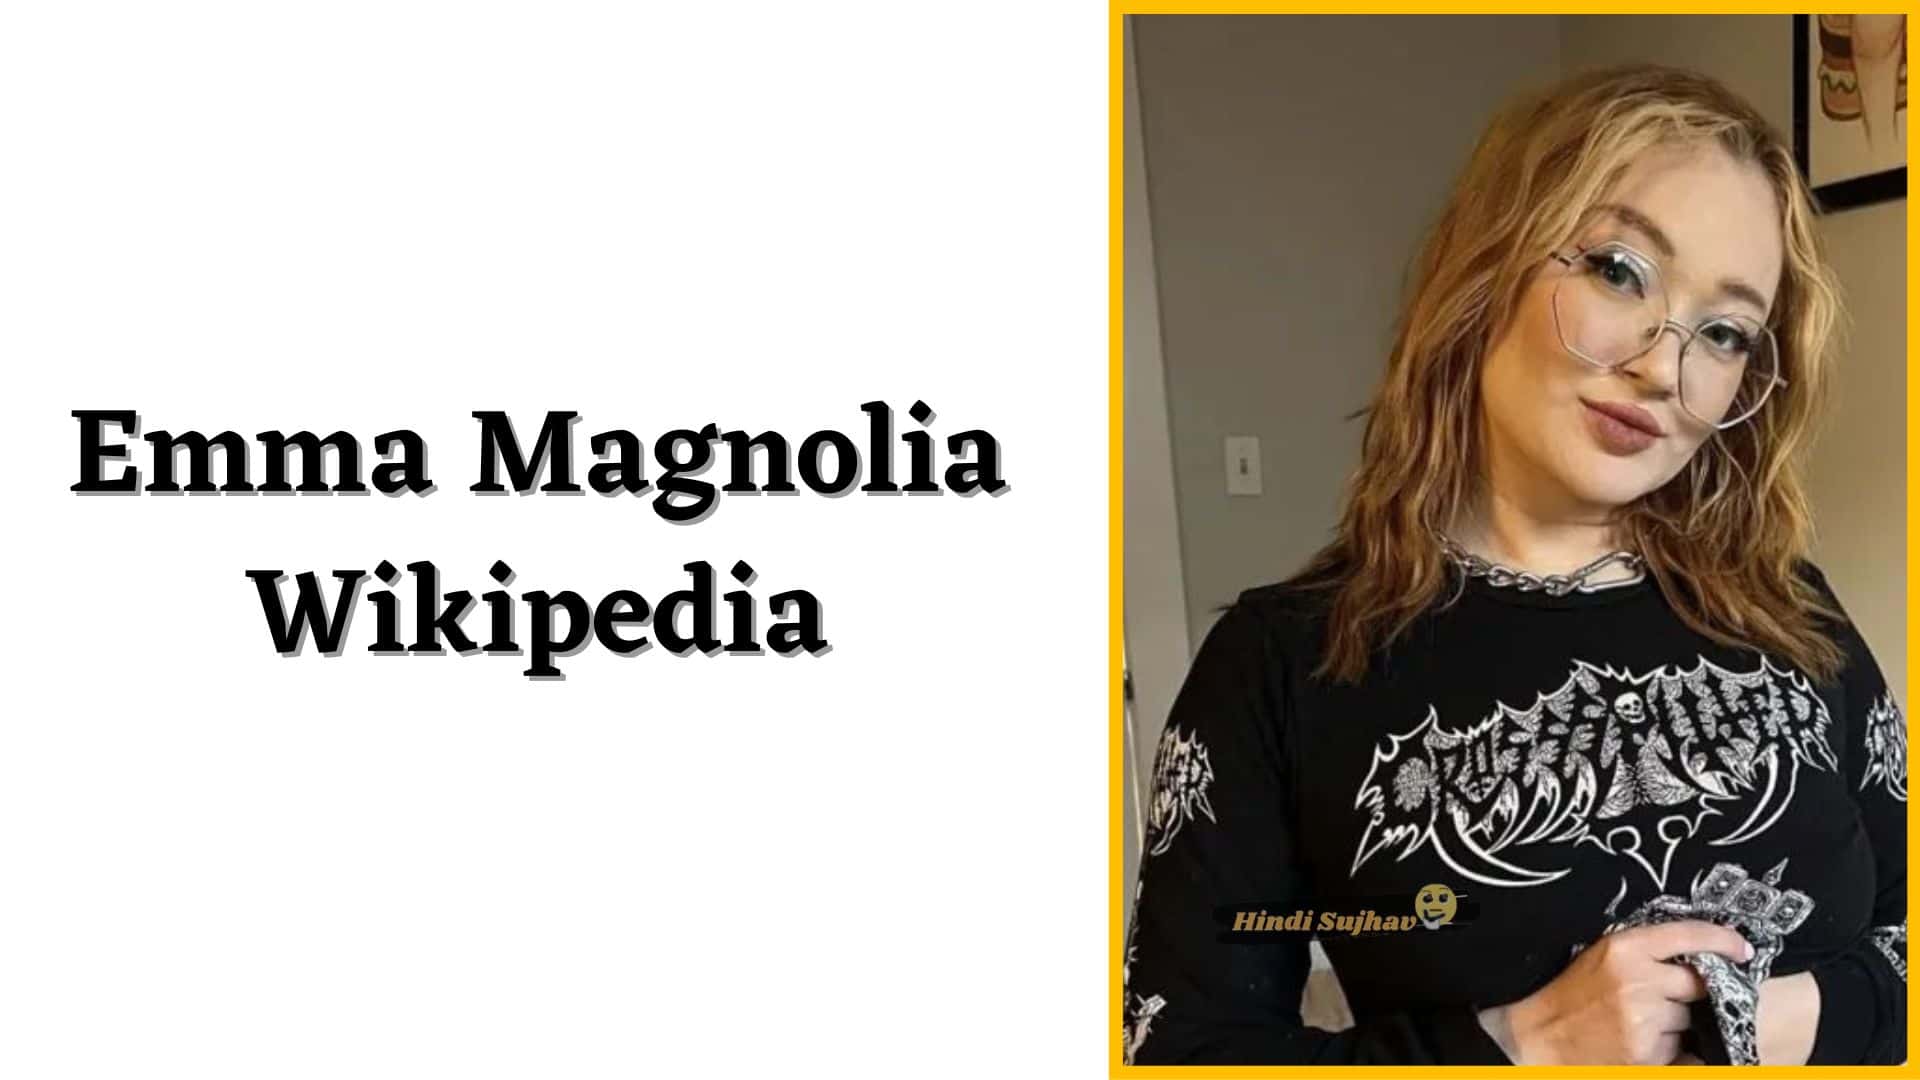 Emma Magnolia Wikipedia, Bio, Body Count, Instagram, Height, Before Surgery, Social Media